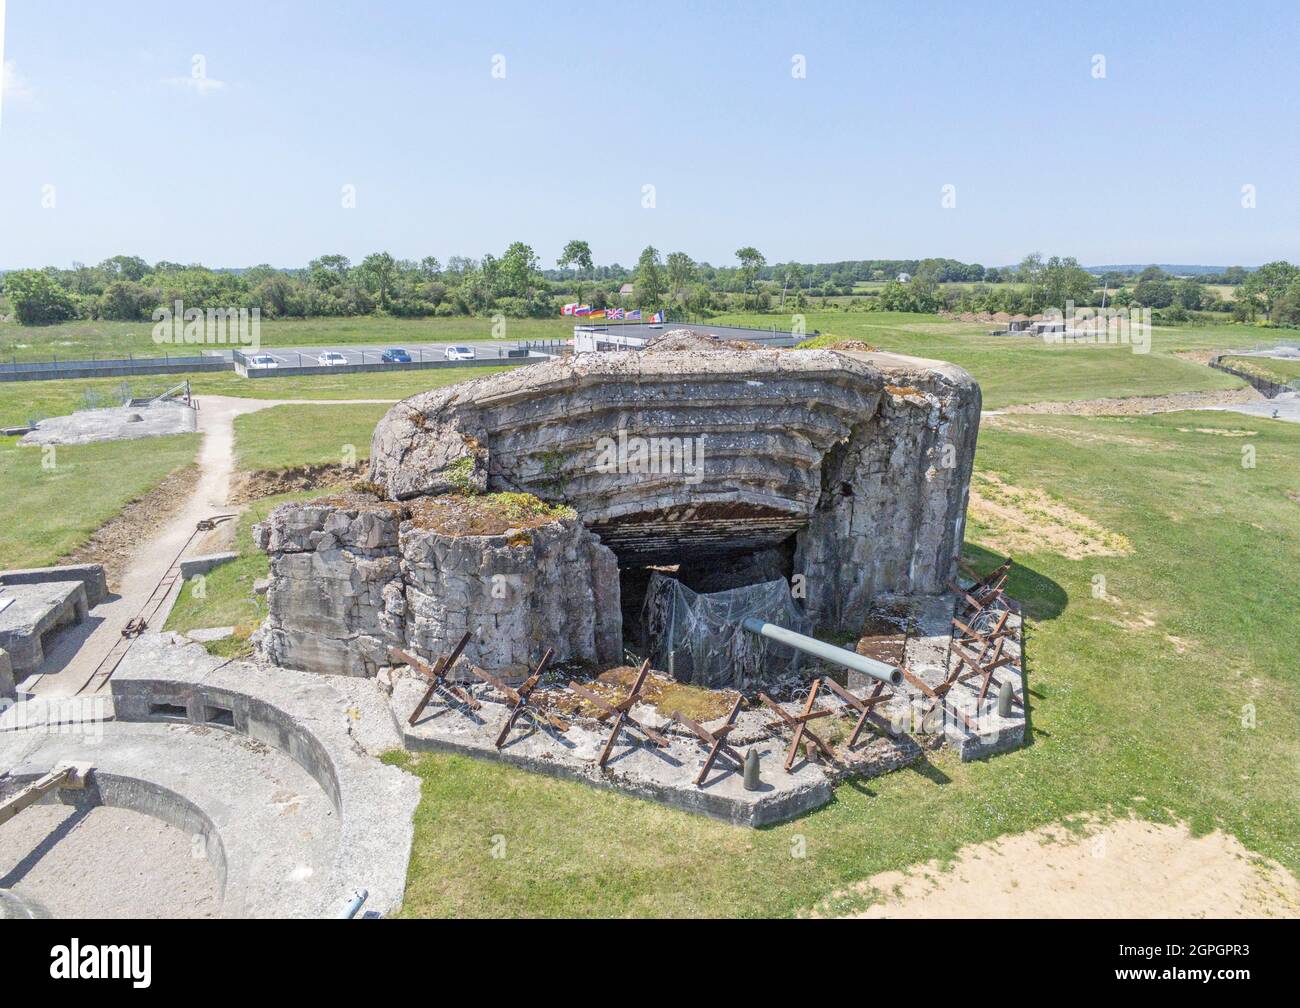 France, Manche, Saint Marcouf, Crisbecq battery, Atlantic Wall german coastal batteries, bunker with its 210mm gun Skoda (aerial view) Stock Photo